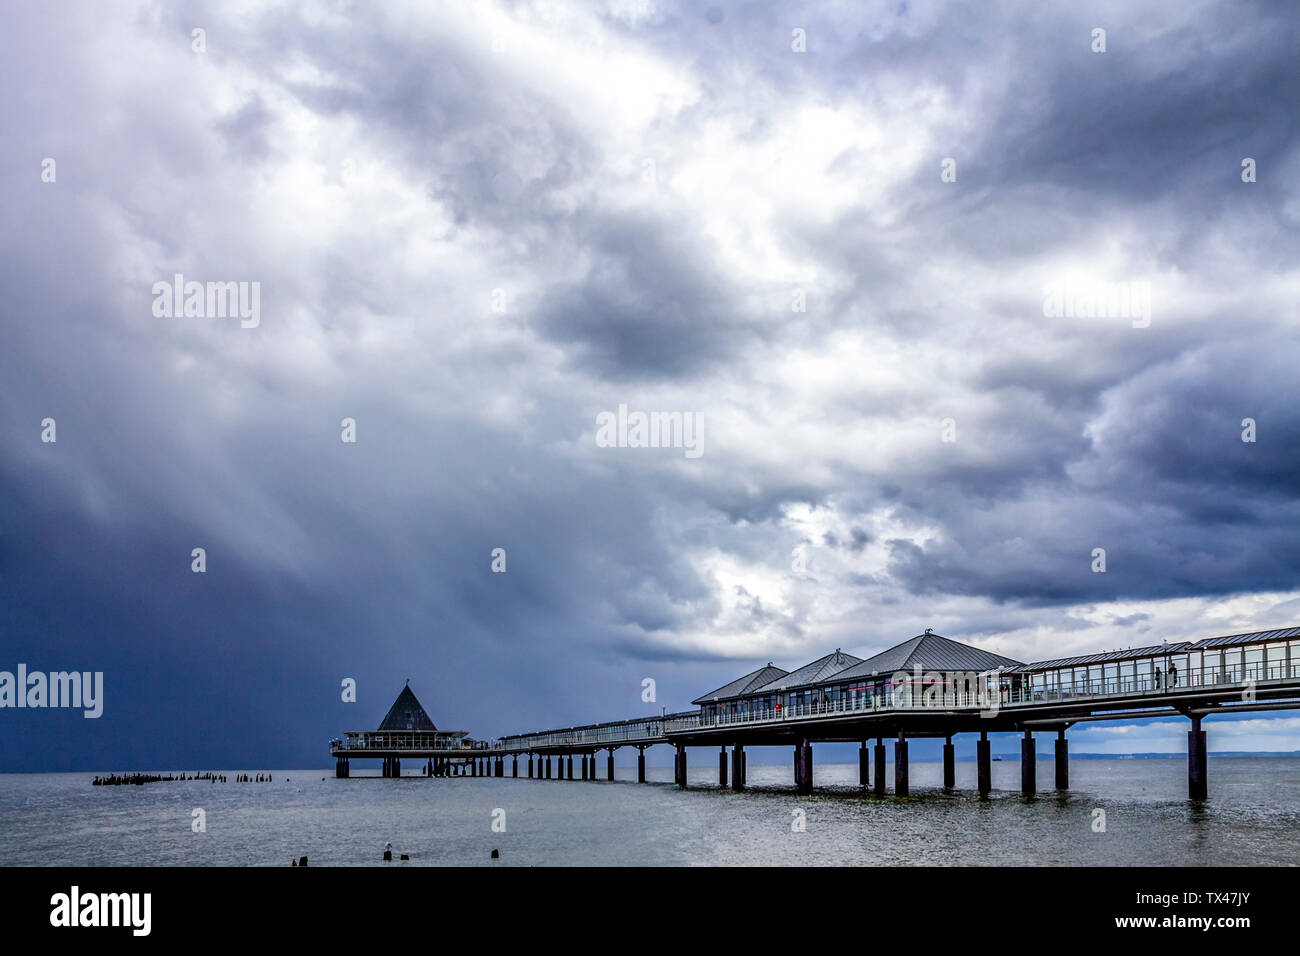 Germania, Usedom, Heringsdorf, pier sotto il cielo nuvoloso Foto Stock